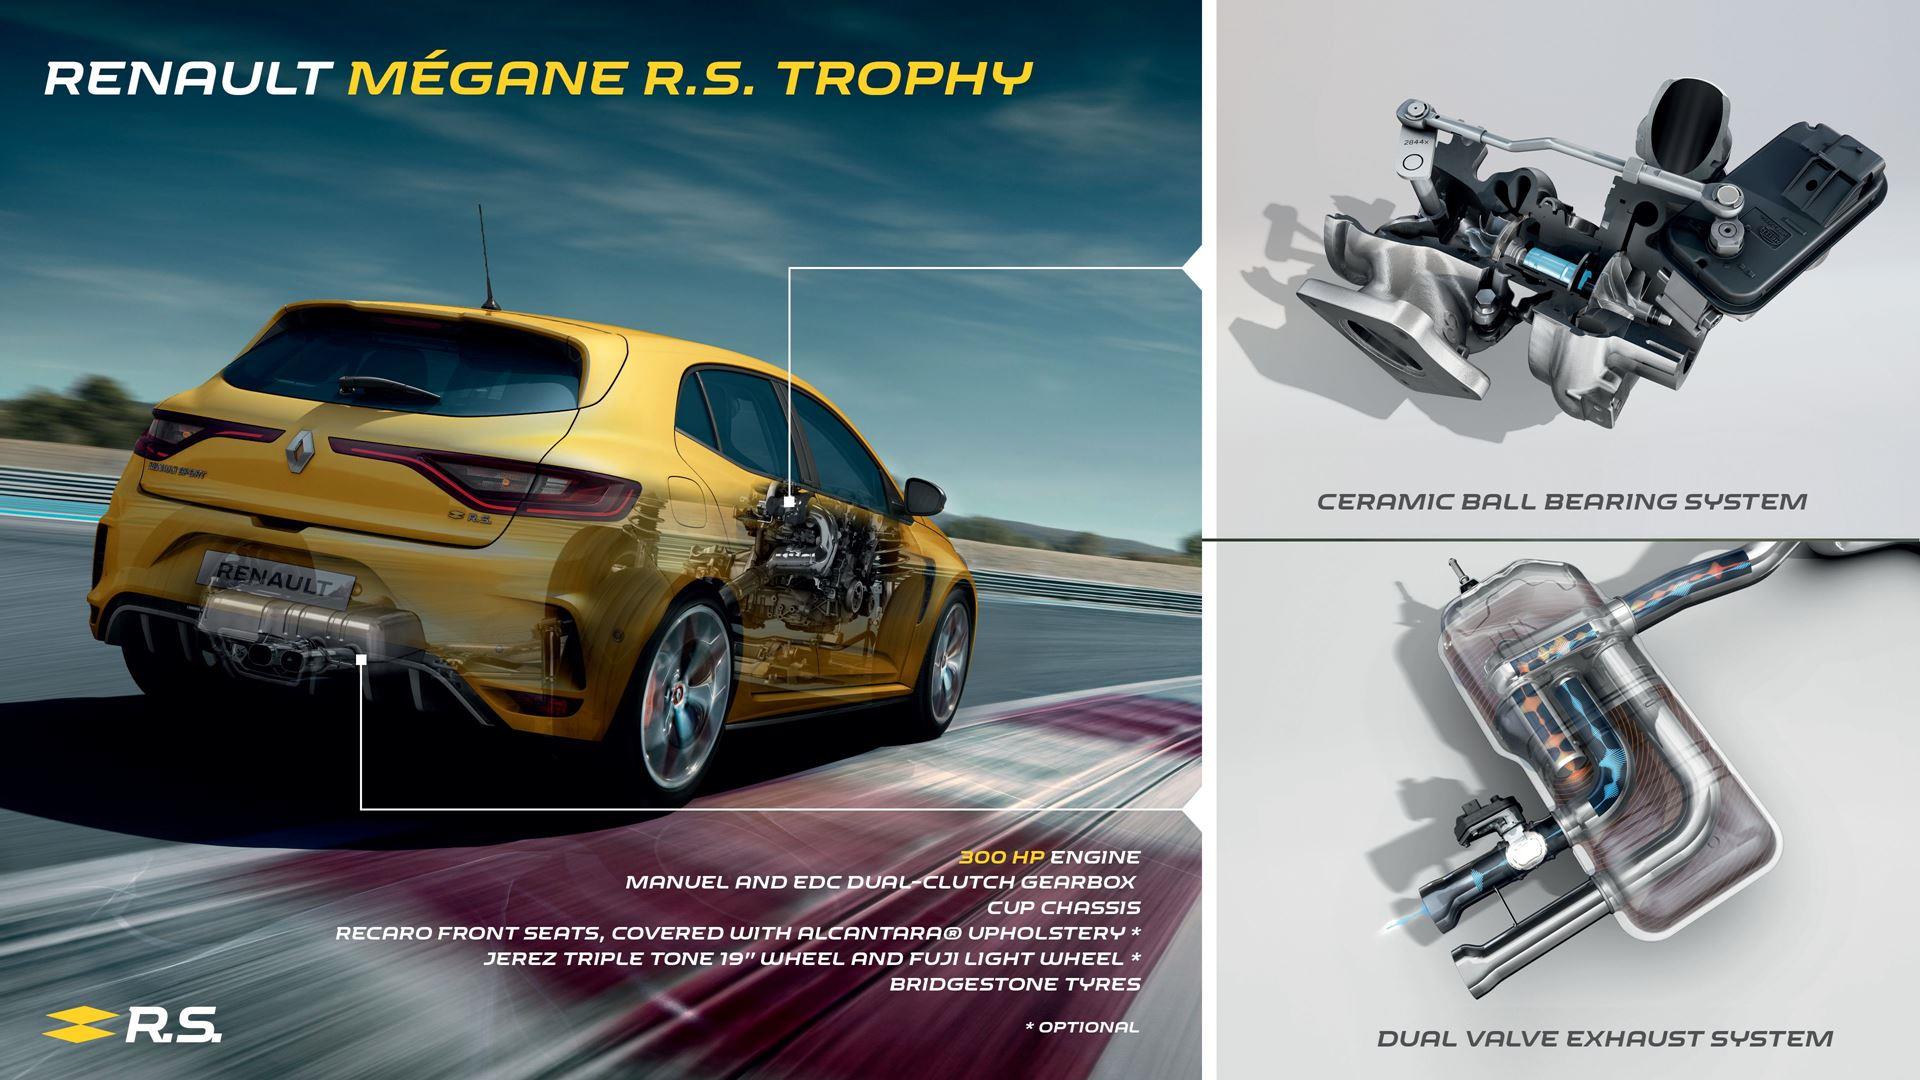 2018 Renault Mégane R.S Trophy